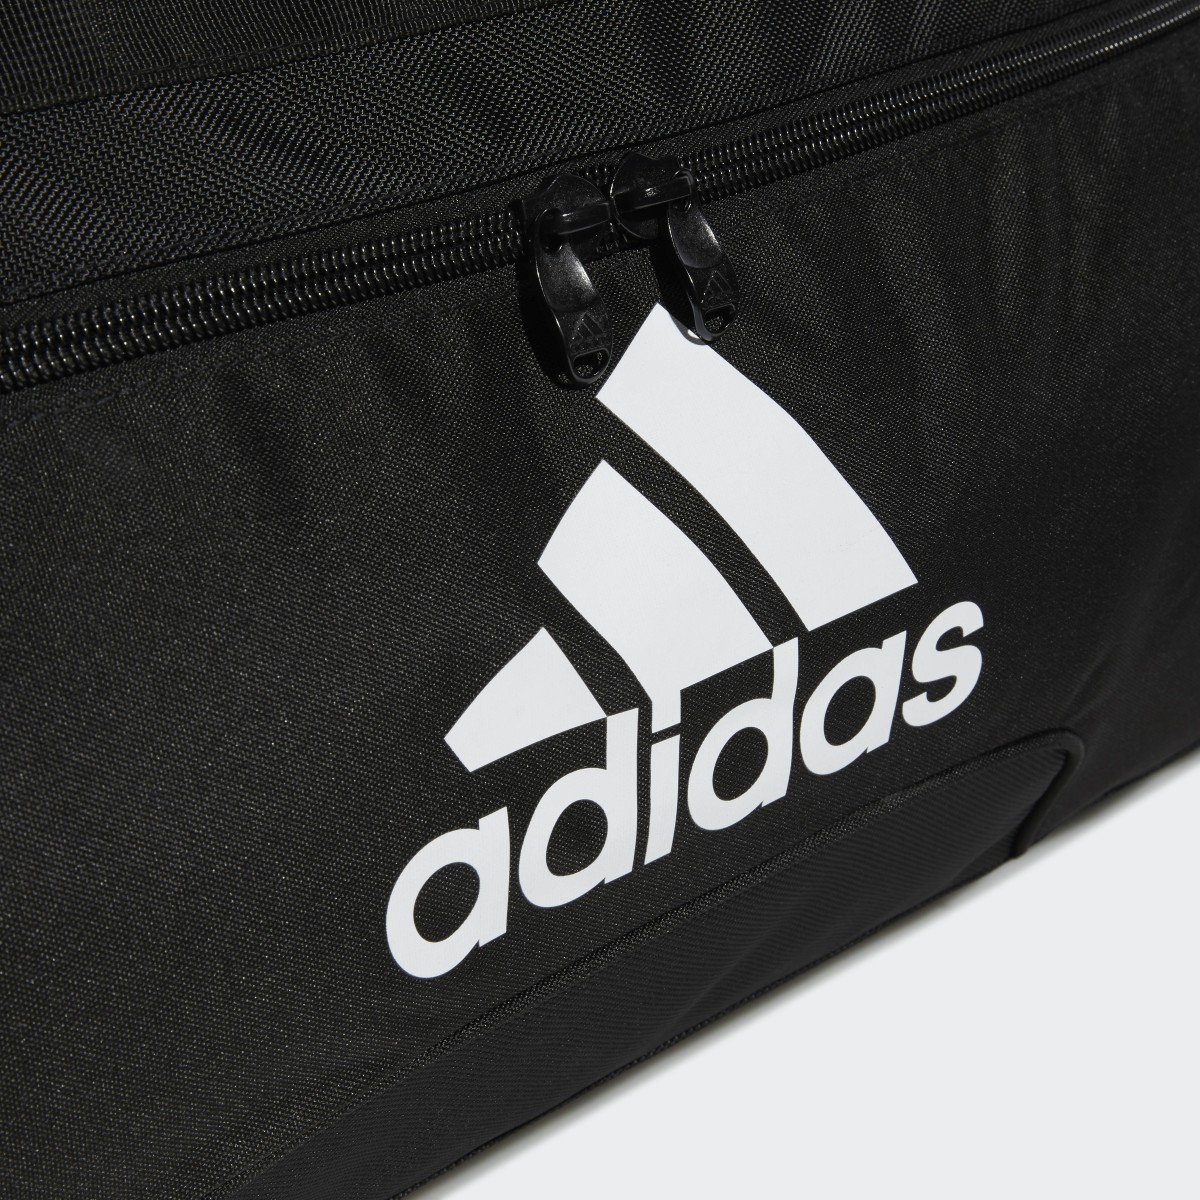 Adidas Team Wheel Bag. 8